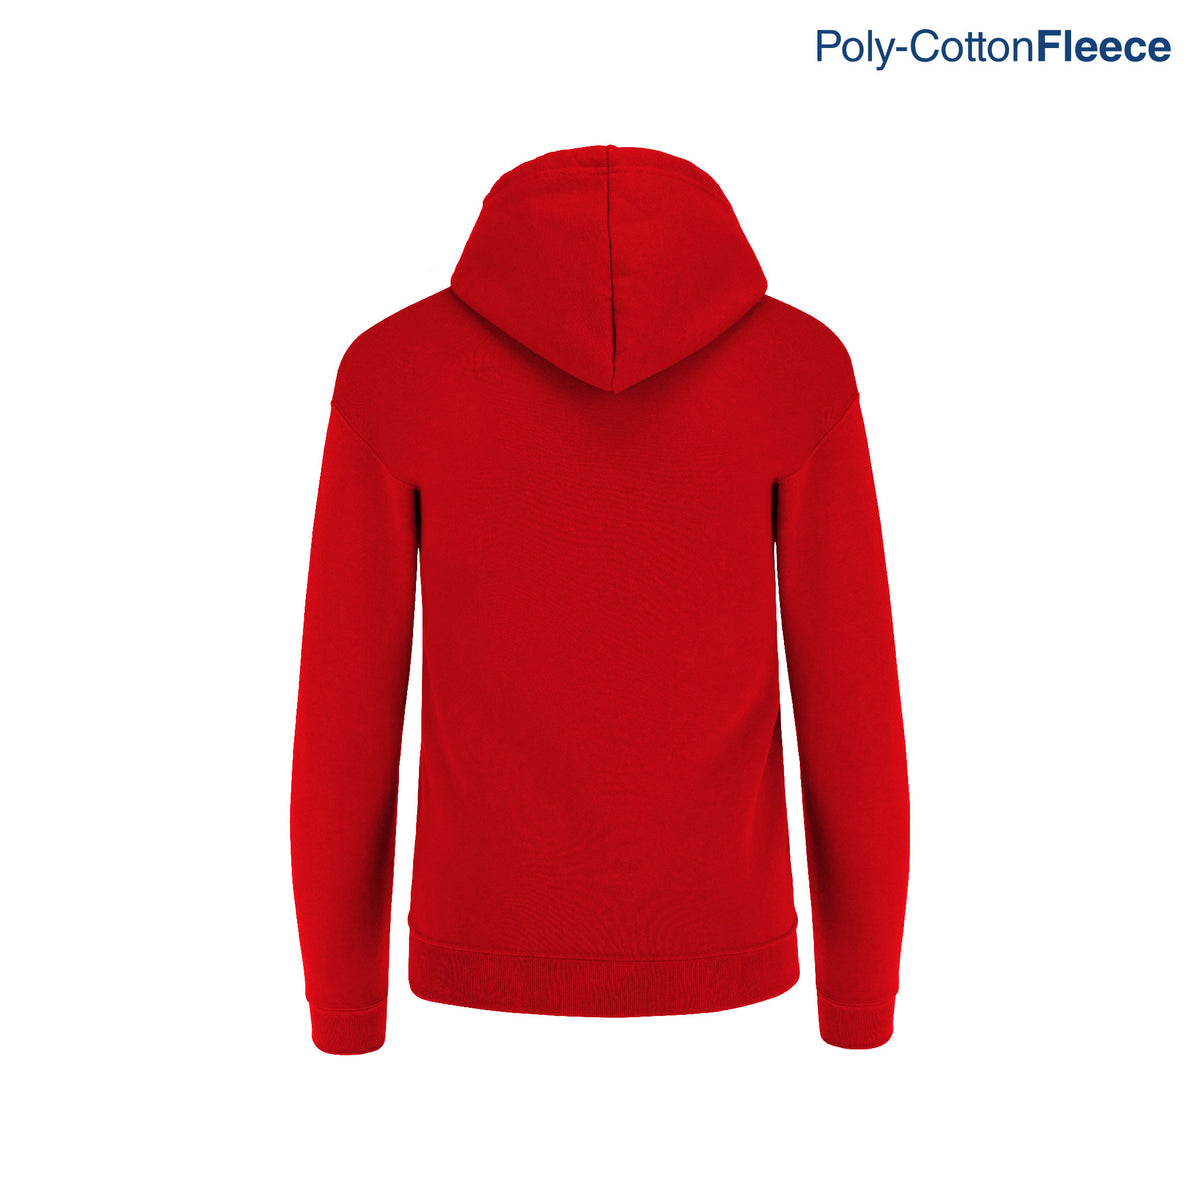 Adult’s Unisex Full Zip Hooded Sweatshirt With Kangaroo Pocket (Red)